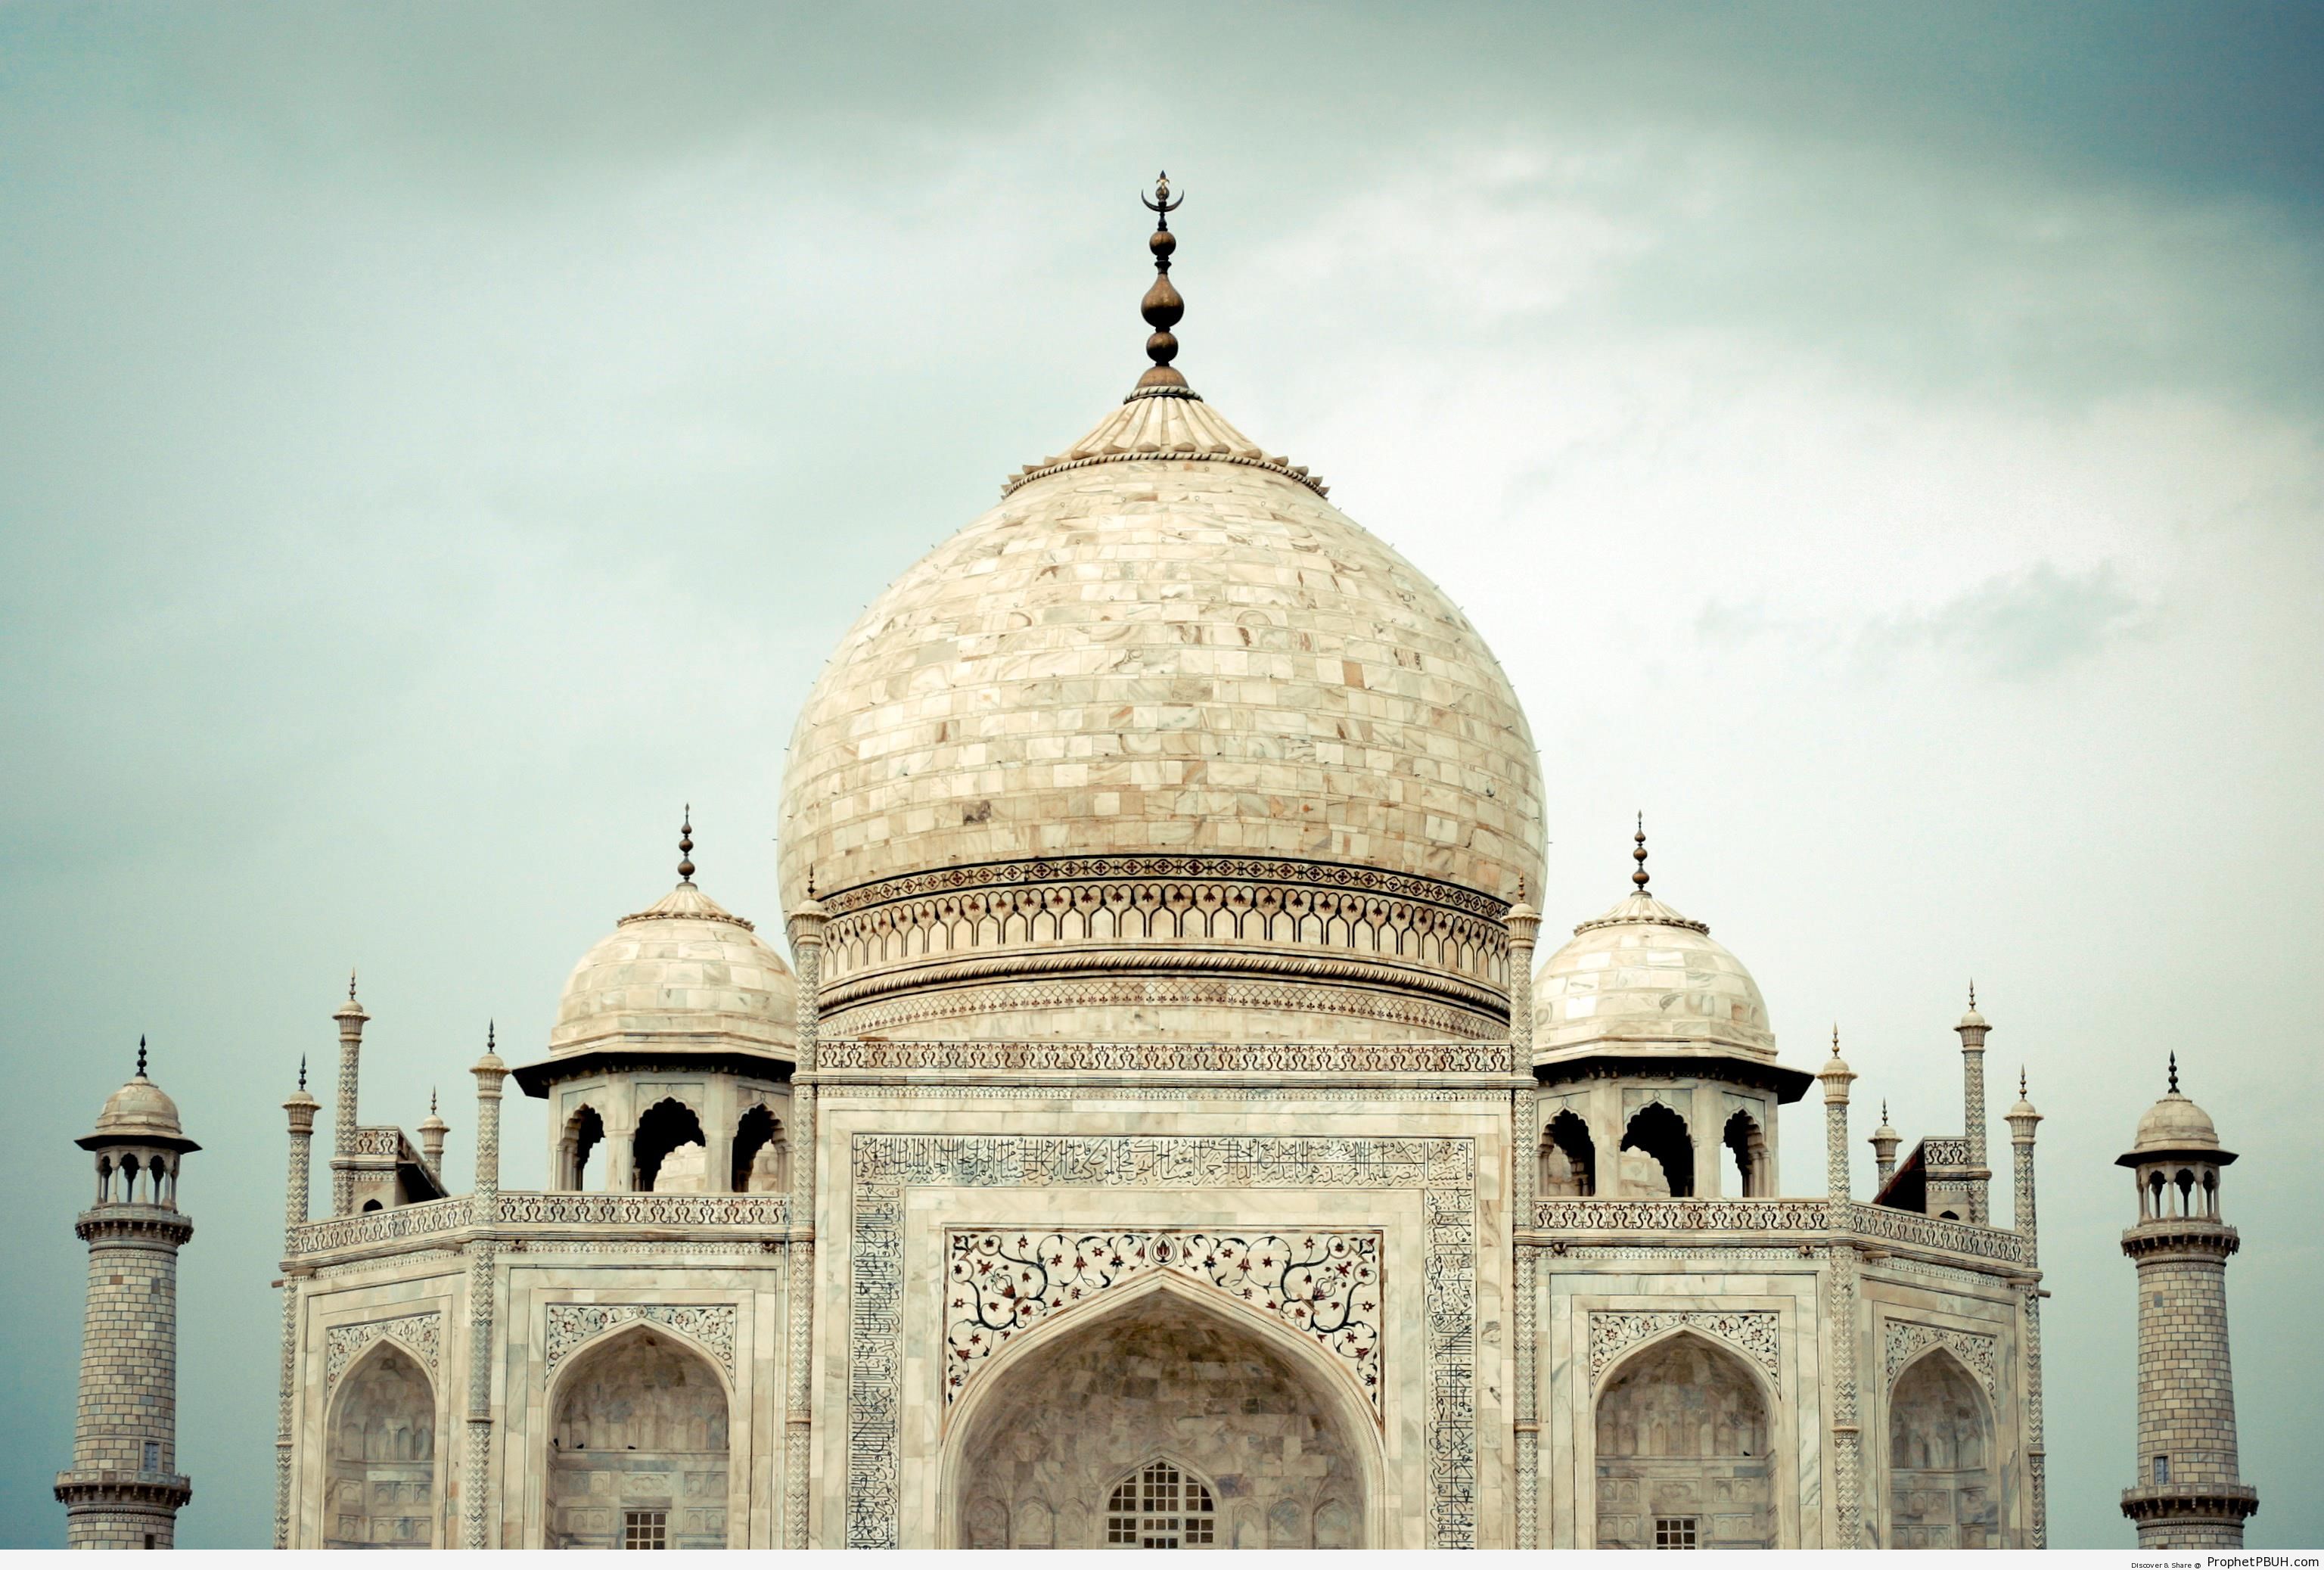 Taj Mahal Upper Half Detail - Agra, India 